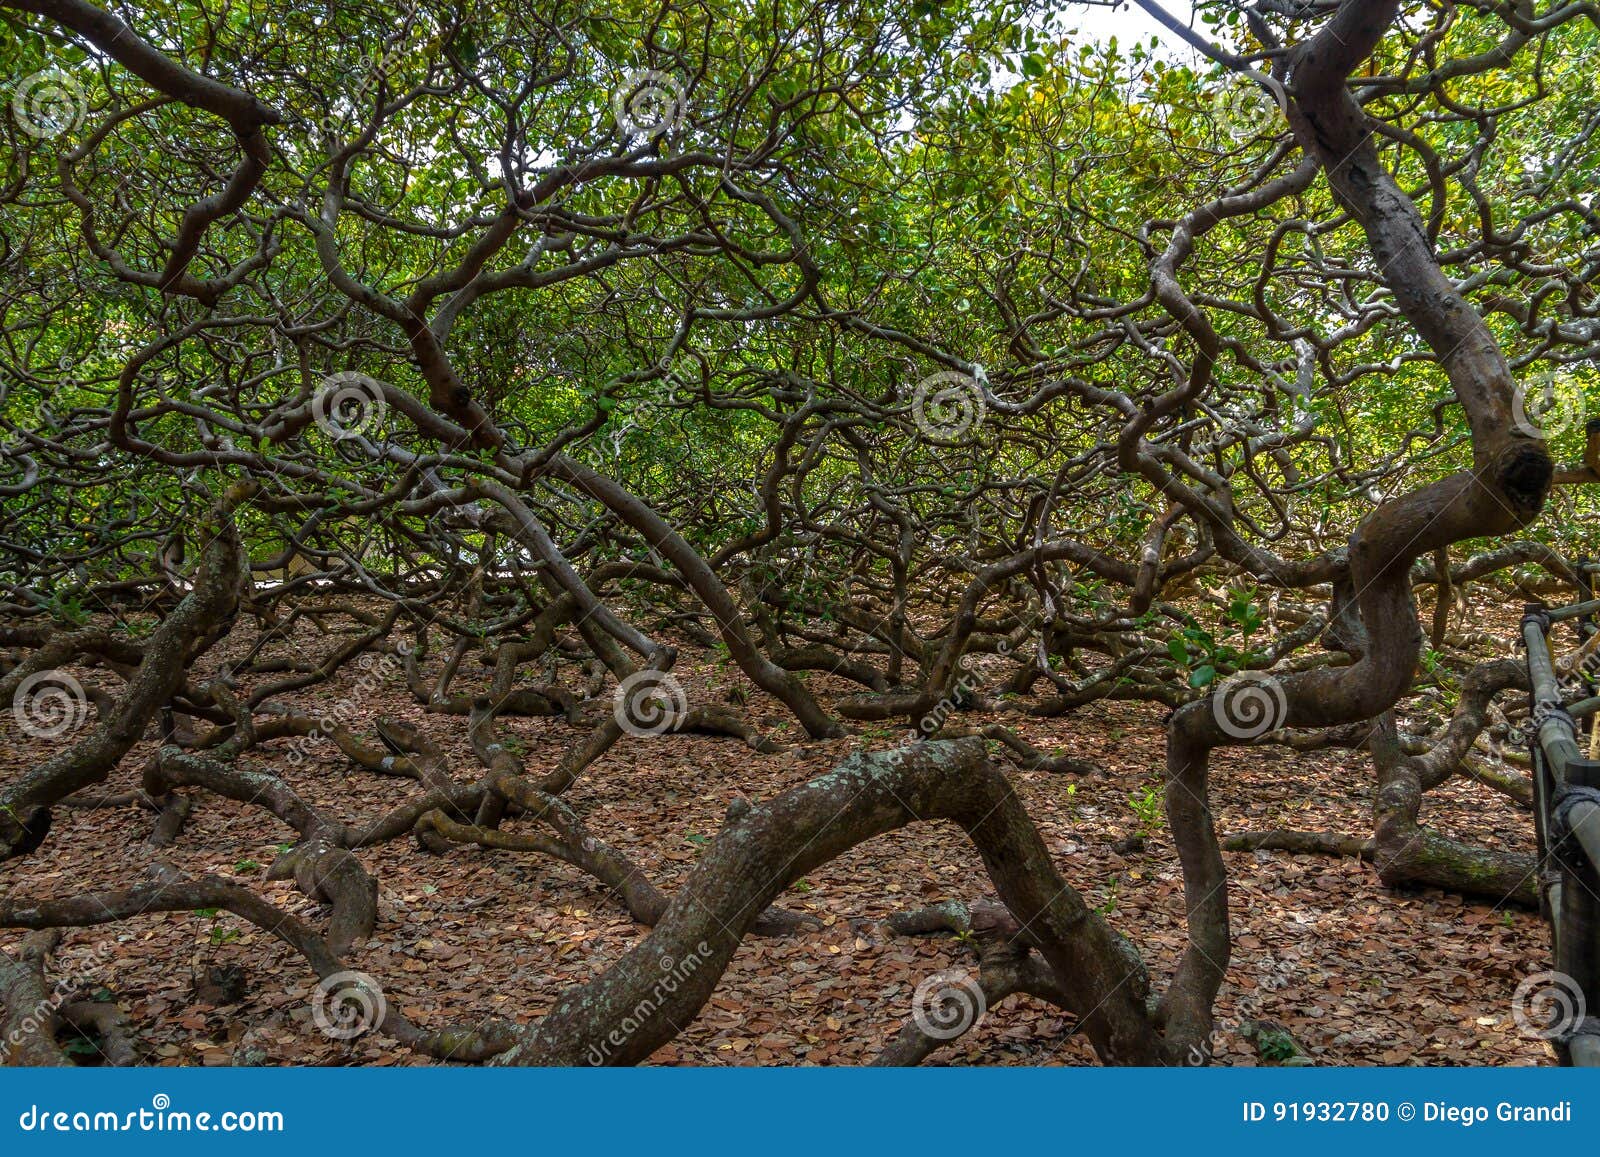 world`s largest cashew tree - pirangi, rio grande do norte, brazil